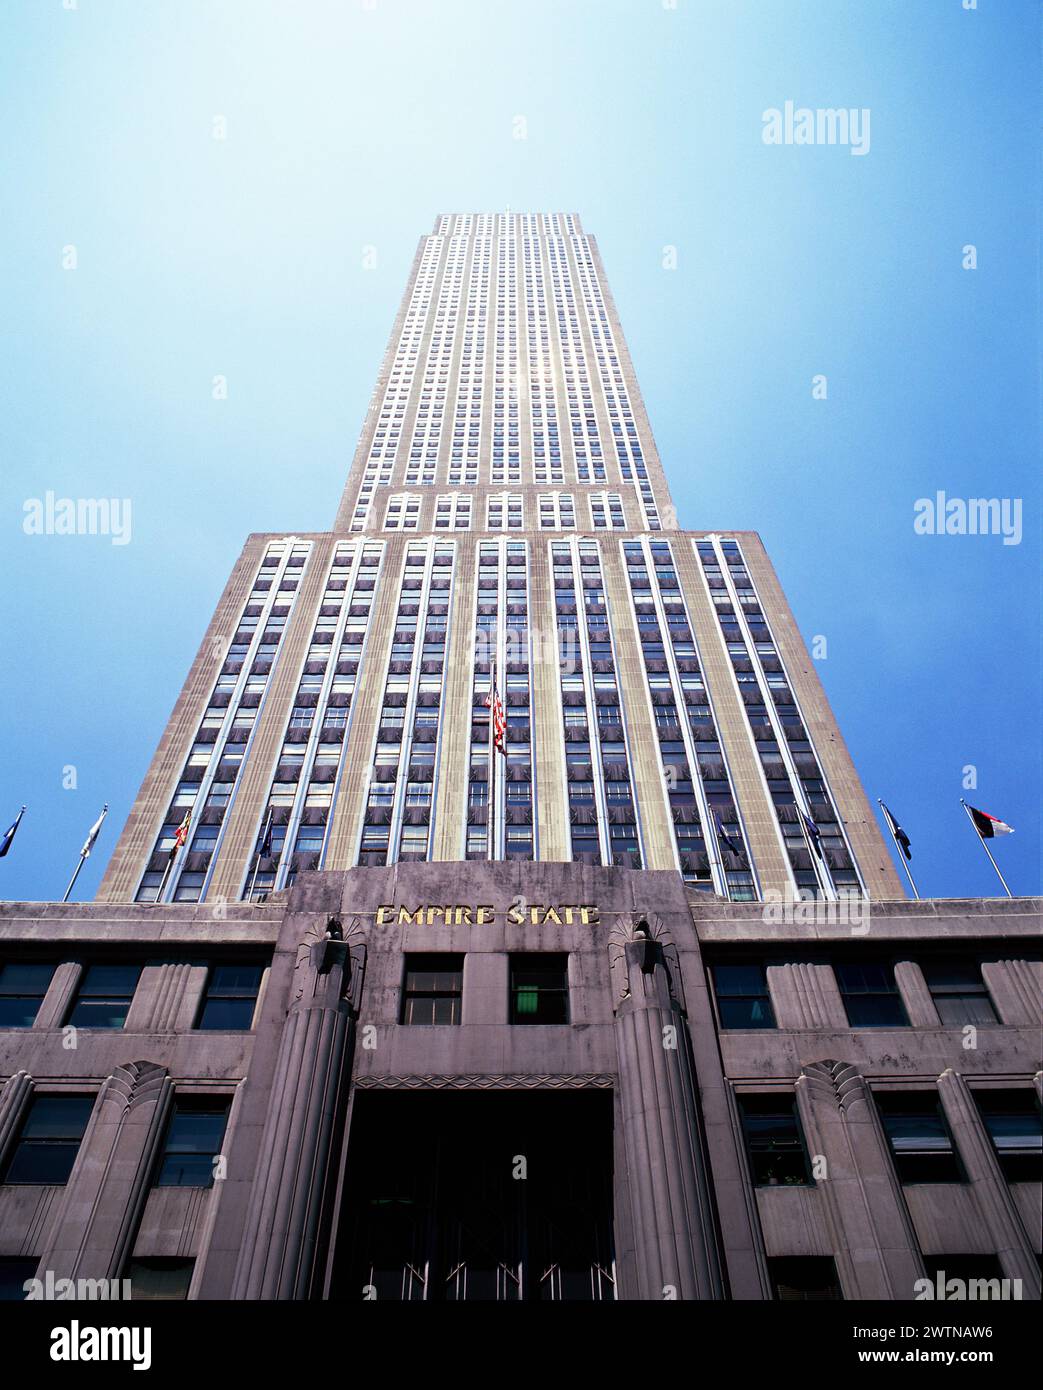 USA. New York City. Empire State building. Stock Photo